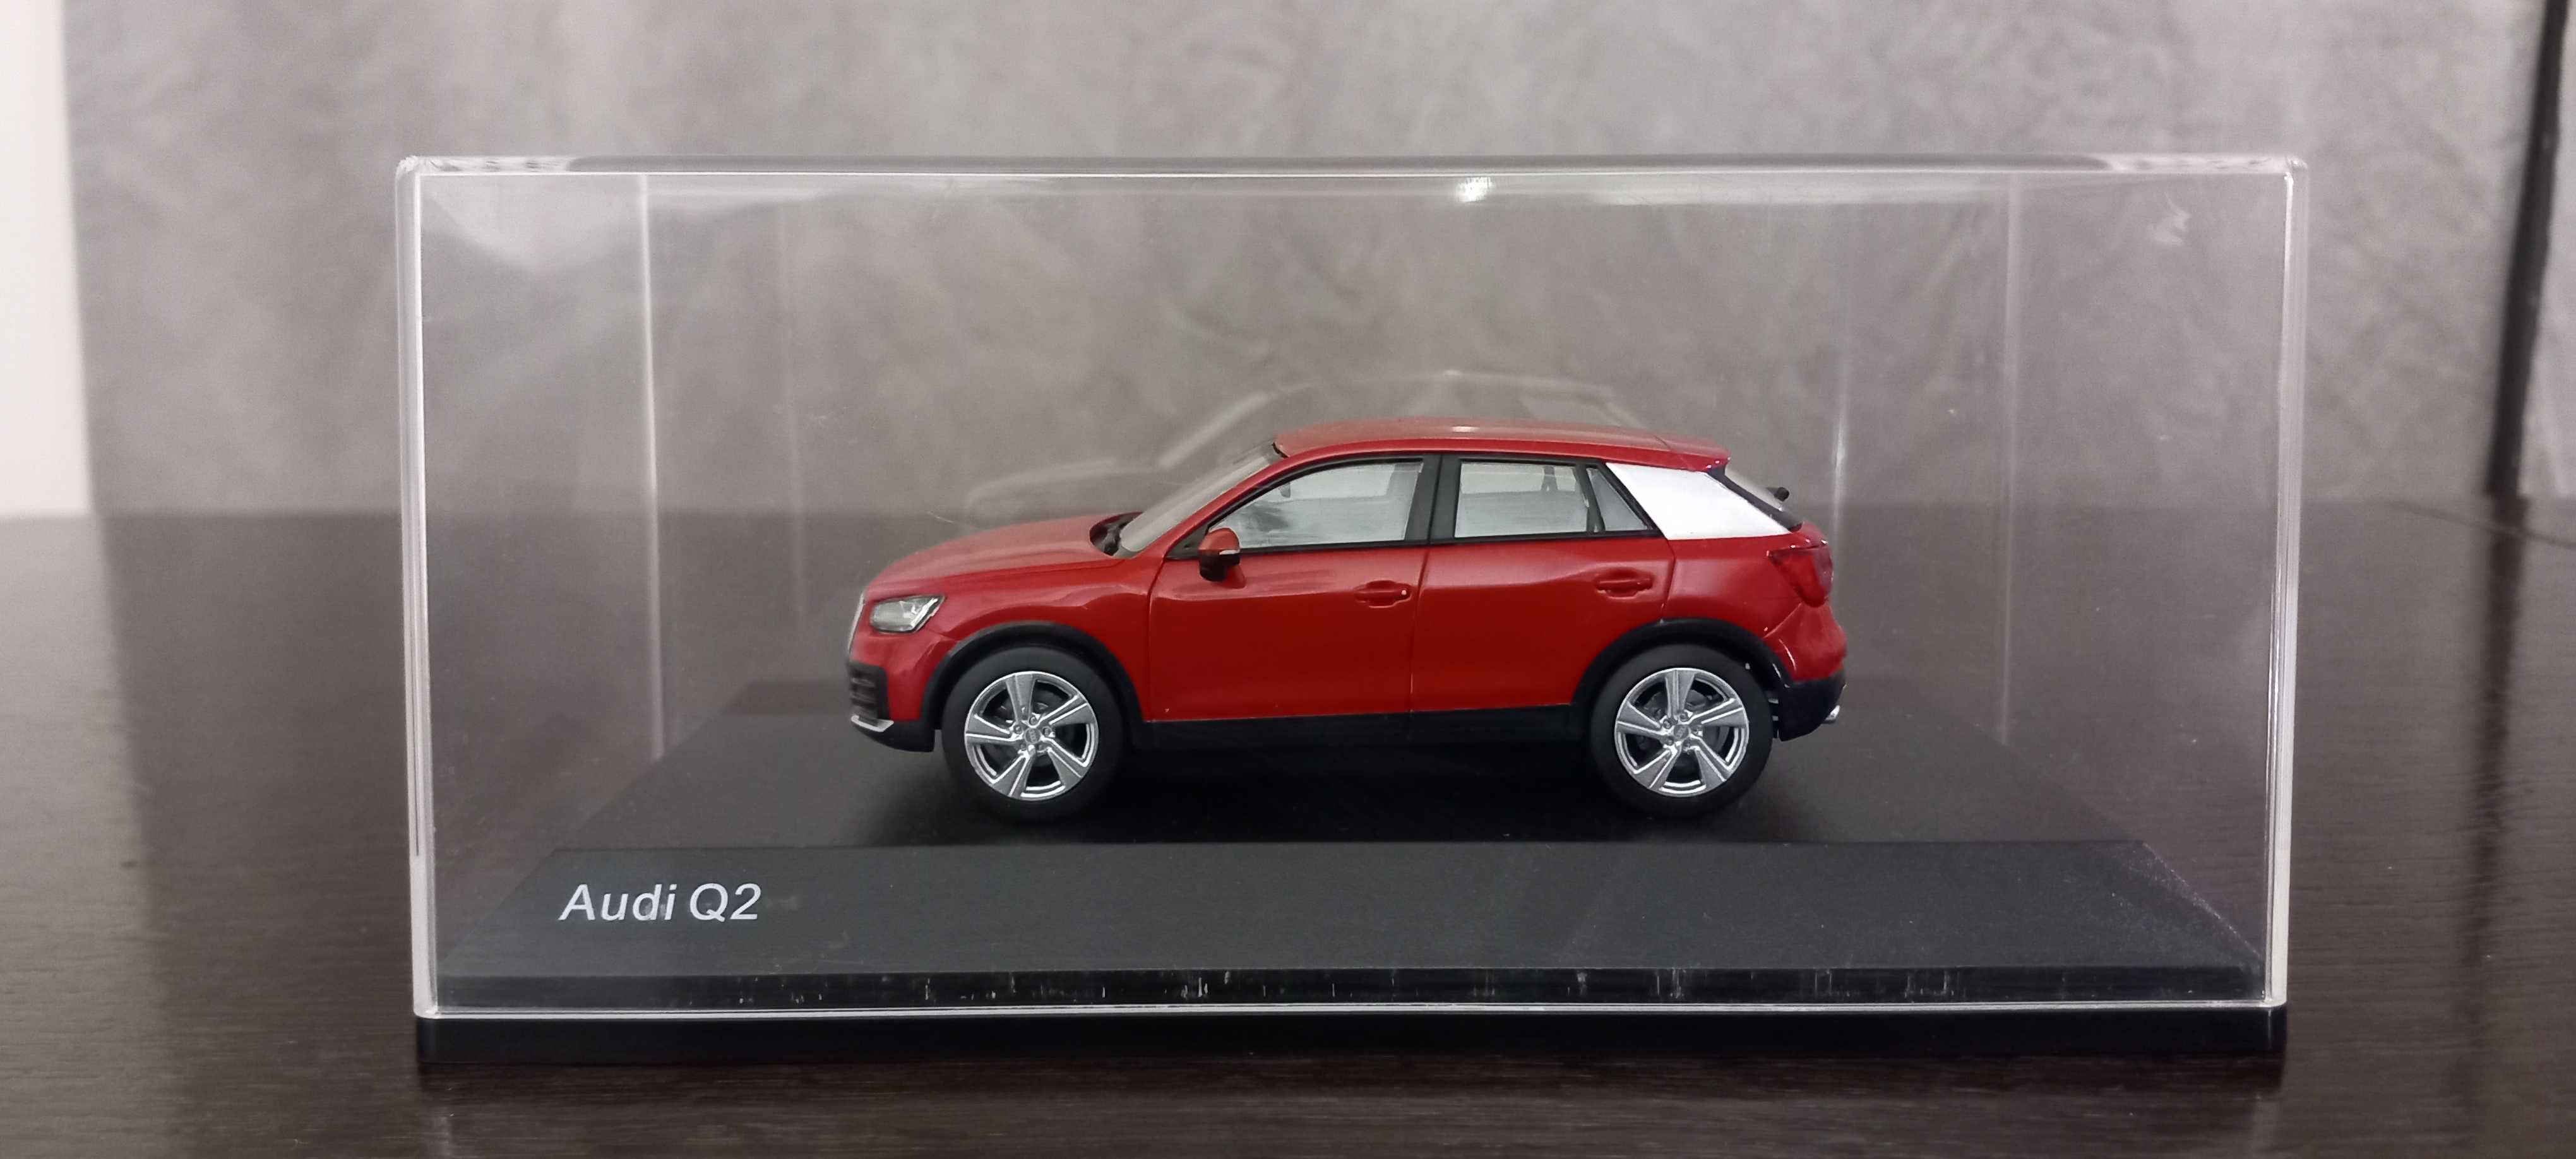 Audi Q2 1/43 IScale Norev Minichamps